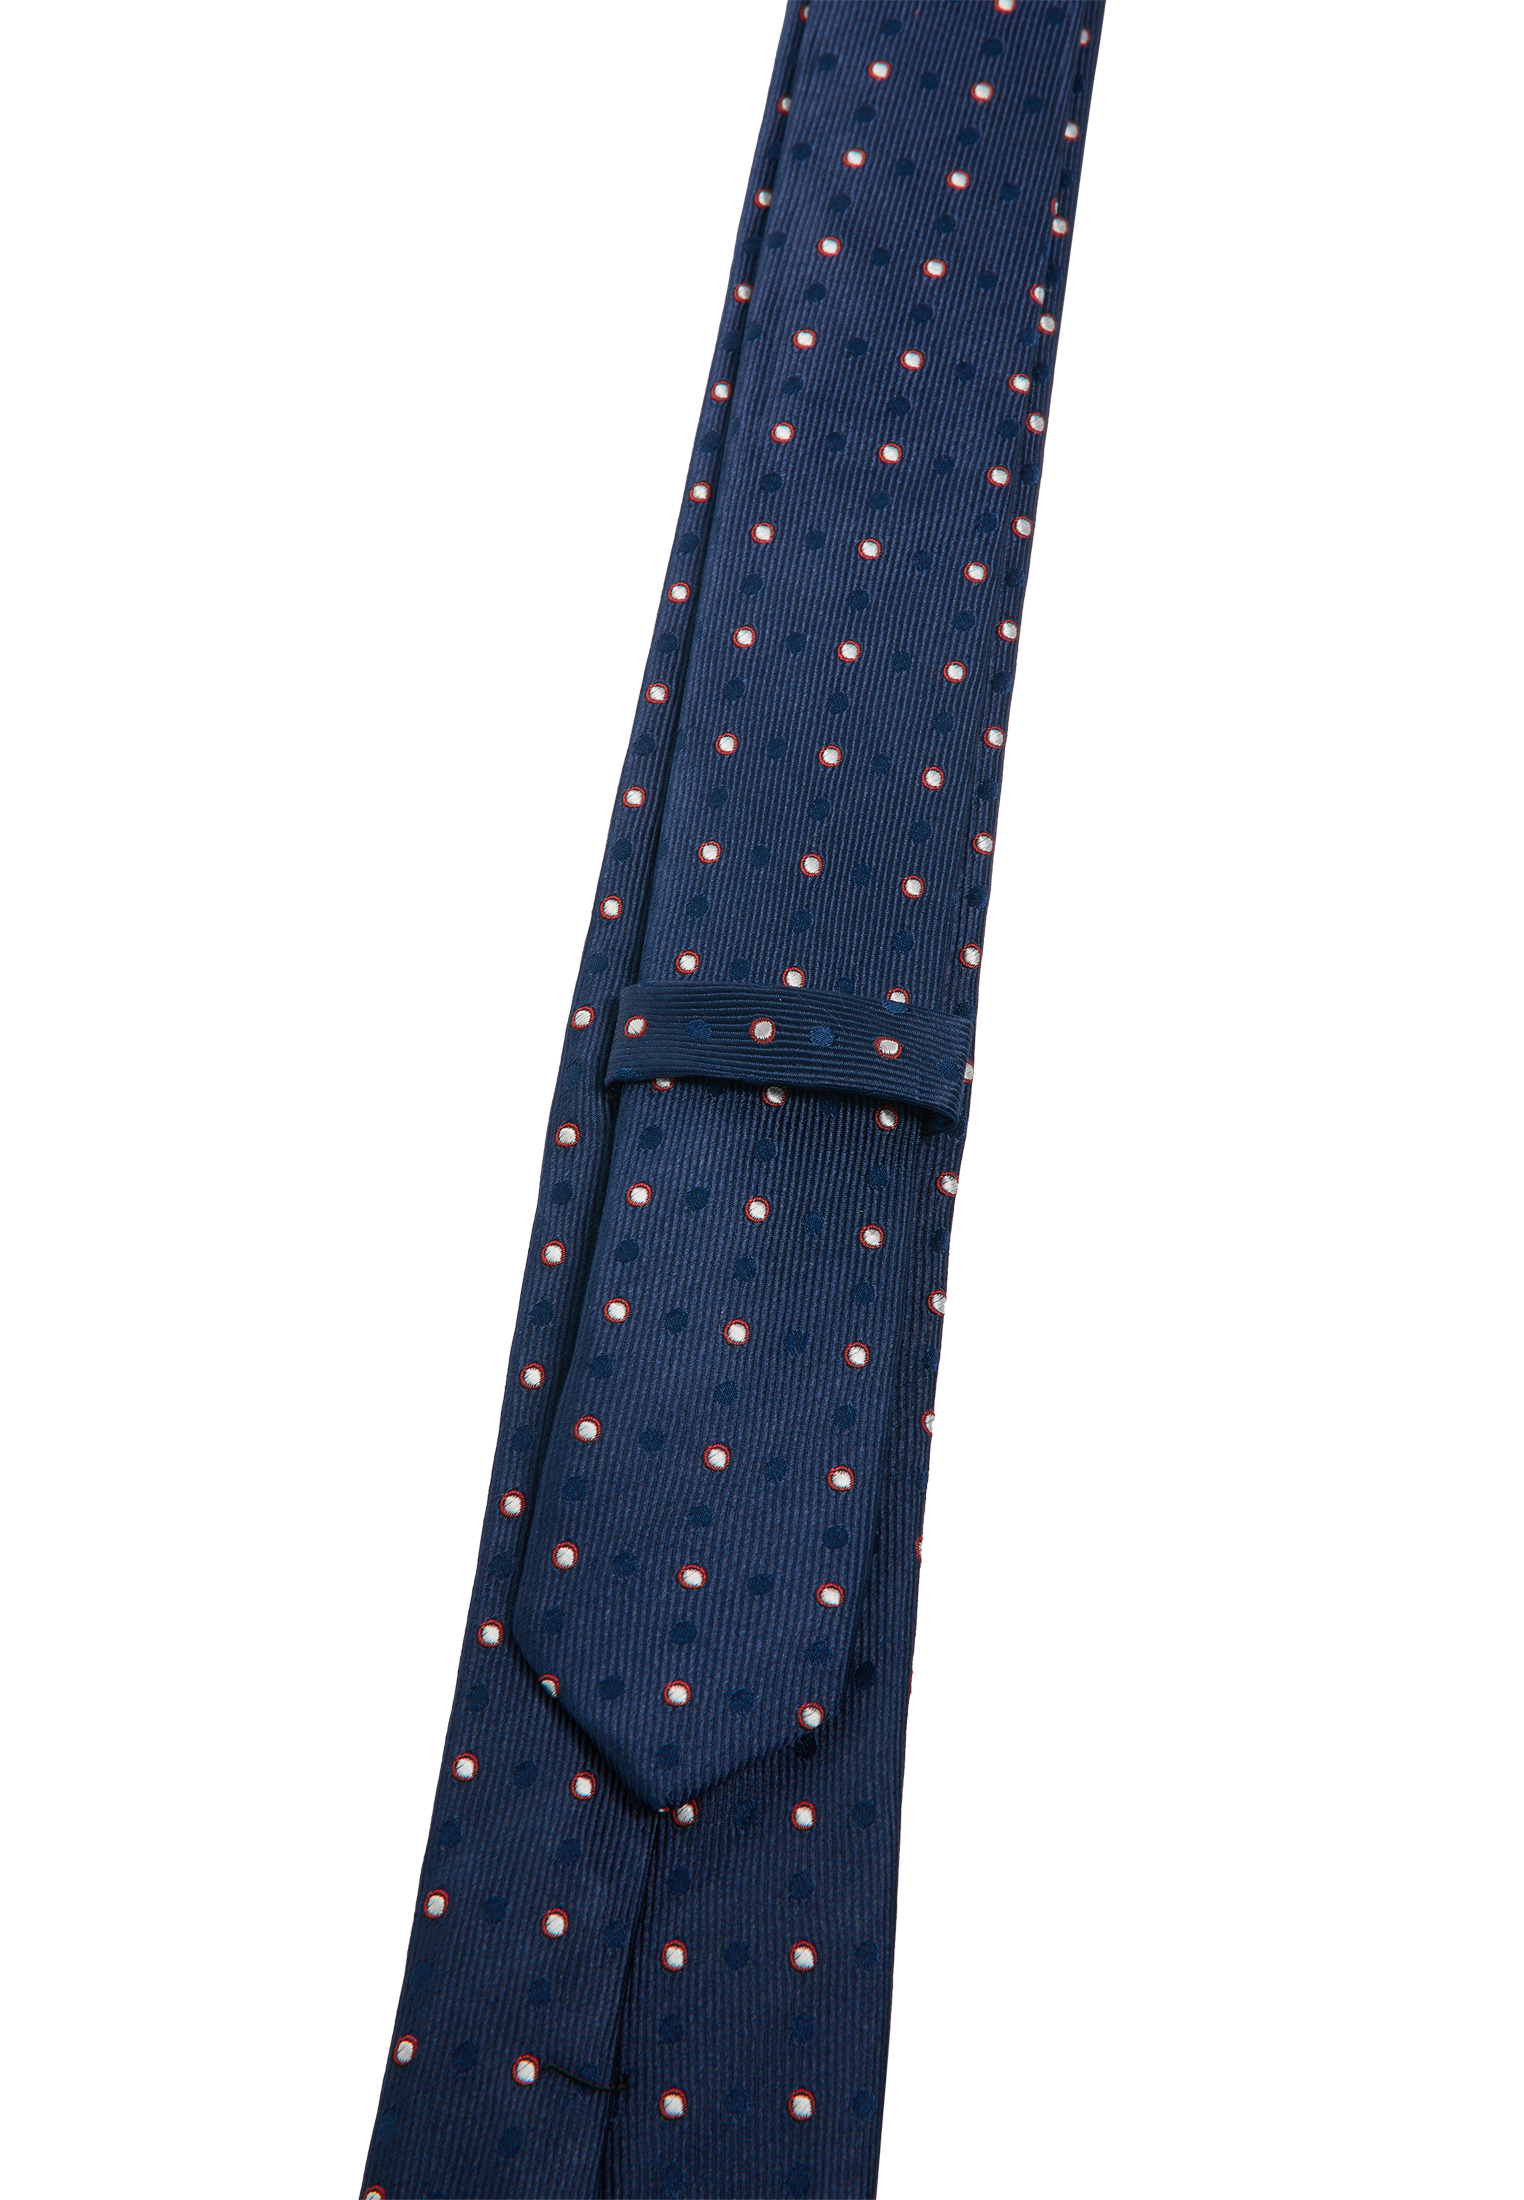 Cravate Bleu marine tacheté